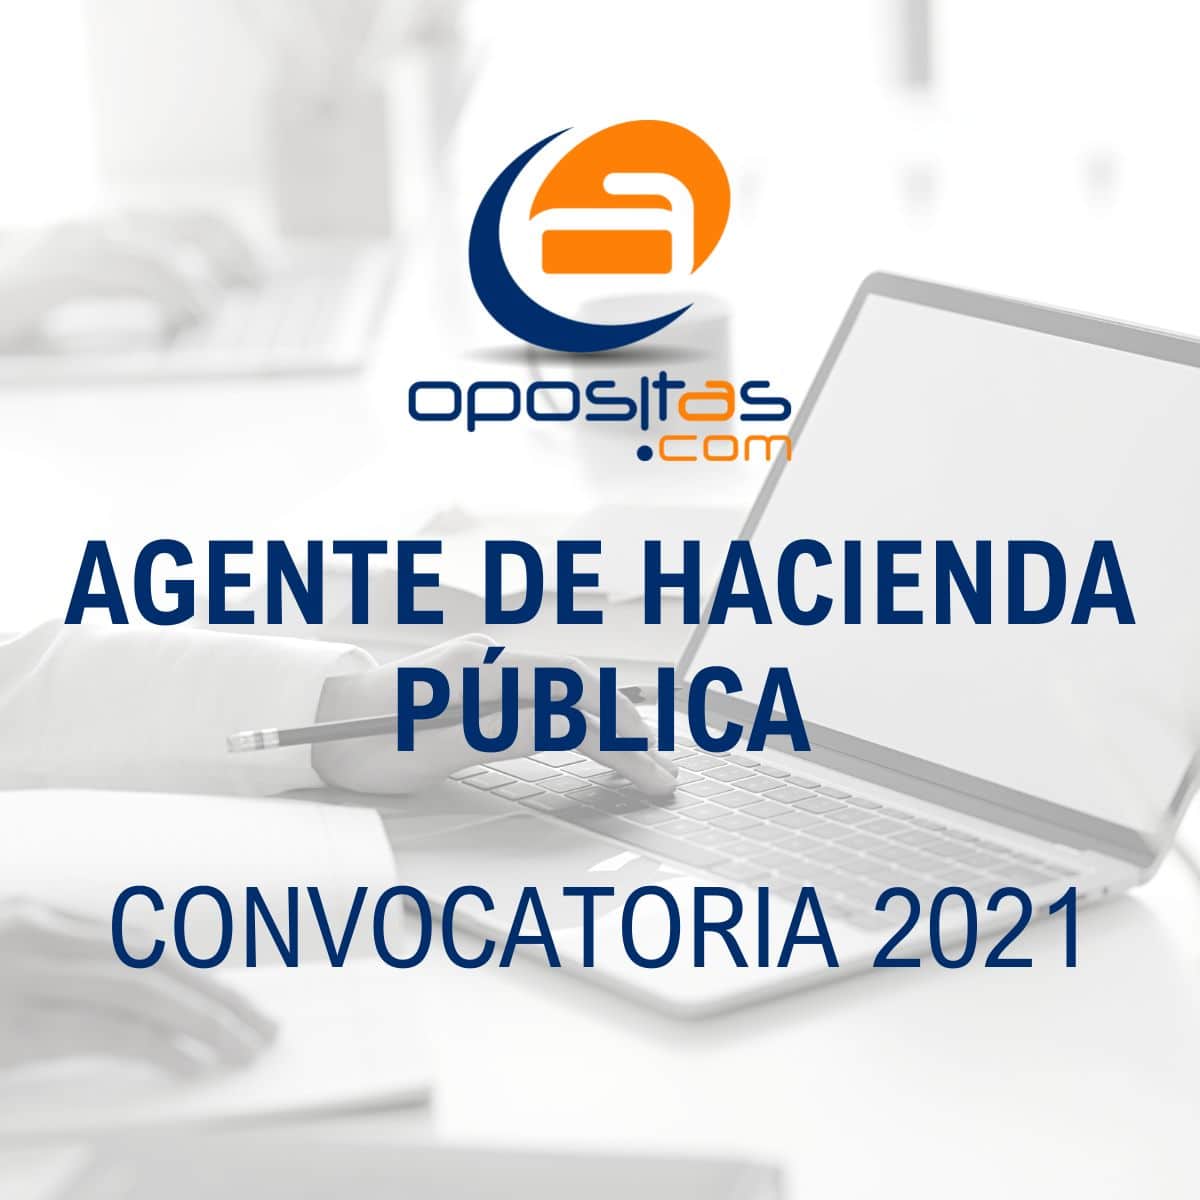 Convocatoria Agentes de Hacienda Pública OPE 2021